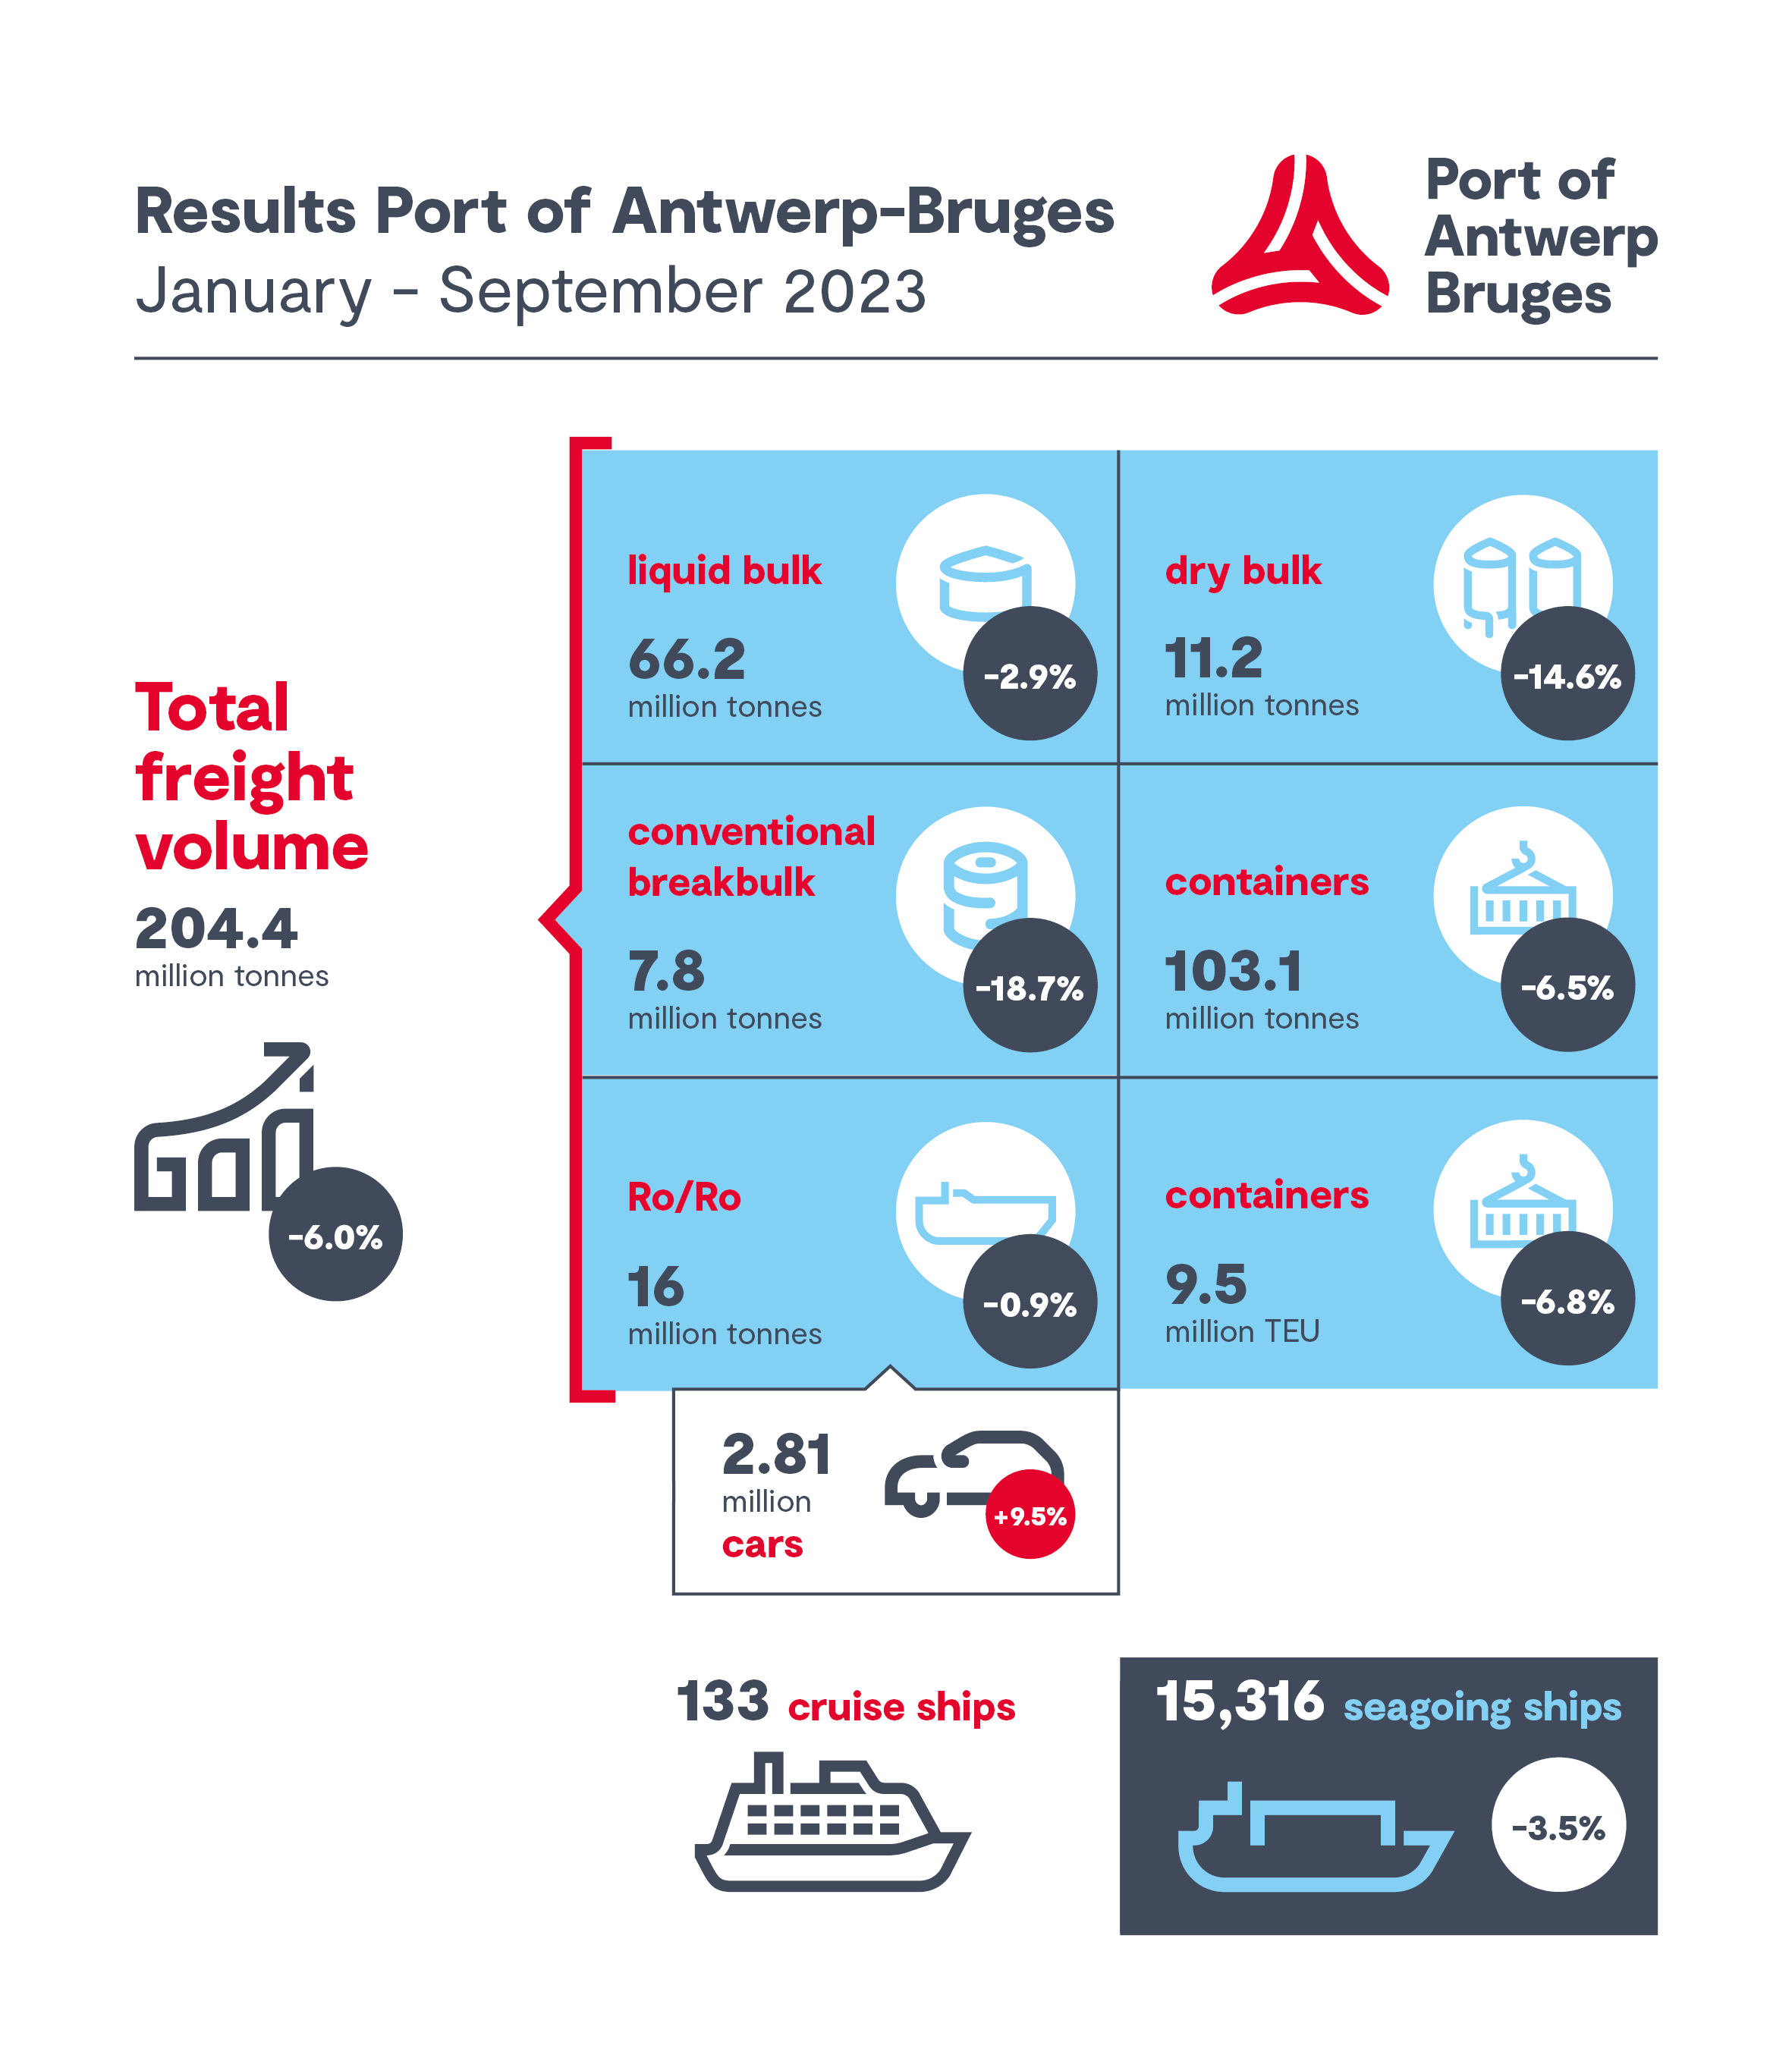 Unstable economy hurts Port of Antwerp-Bruges throughput